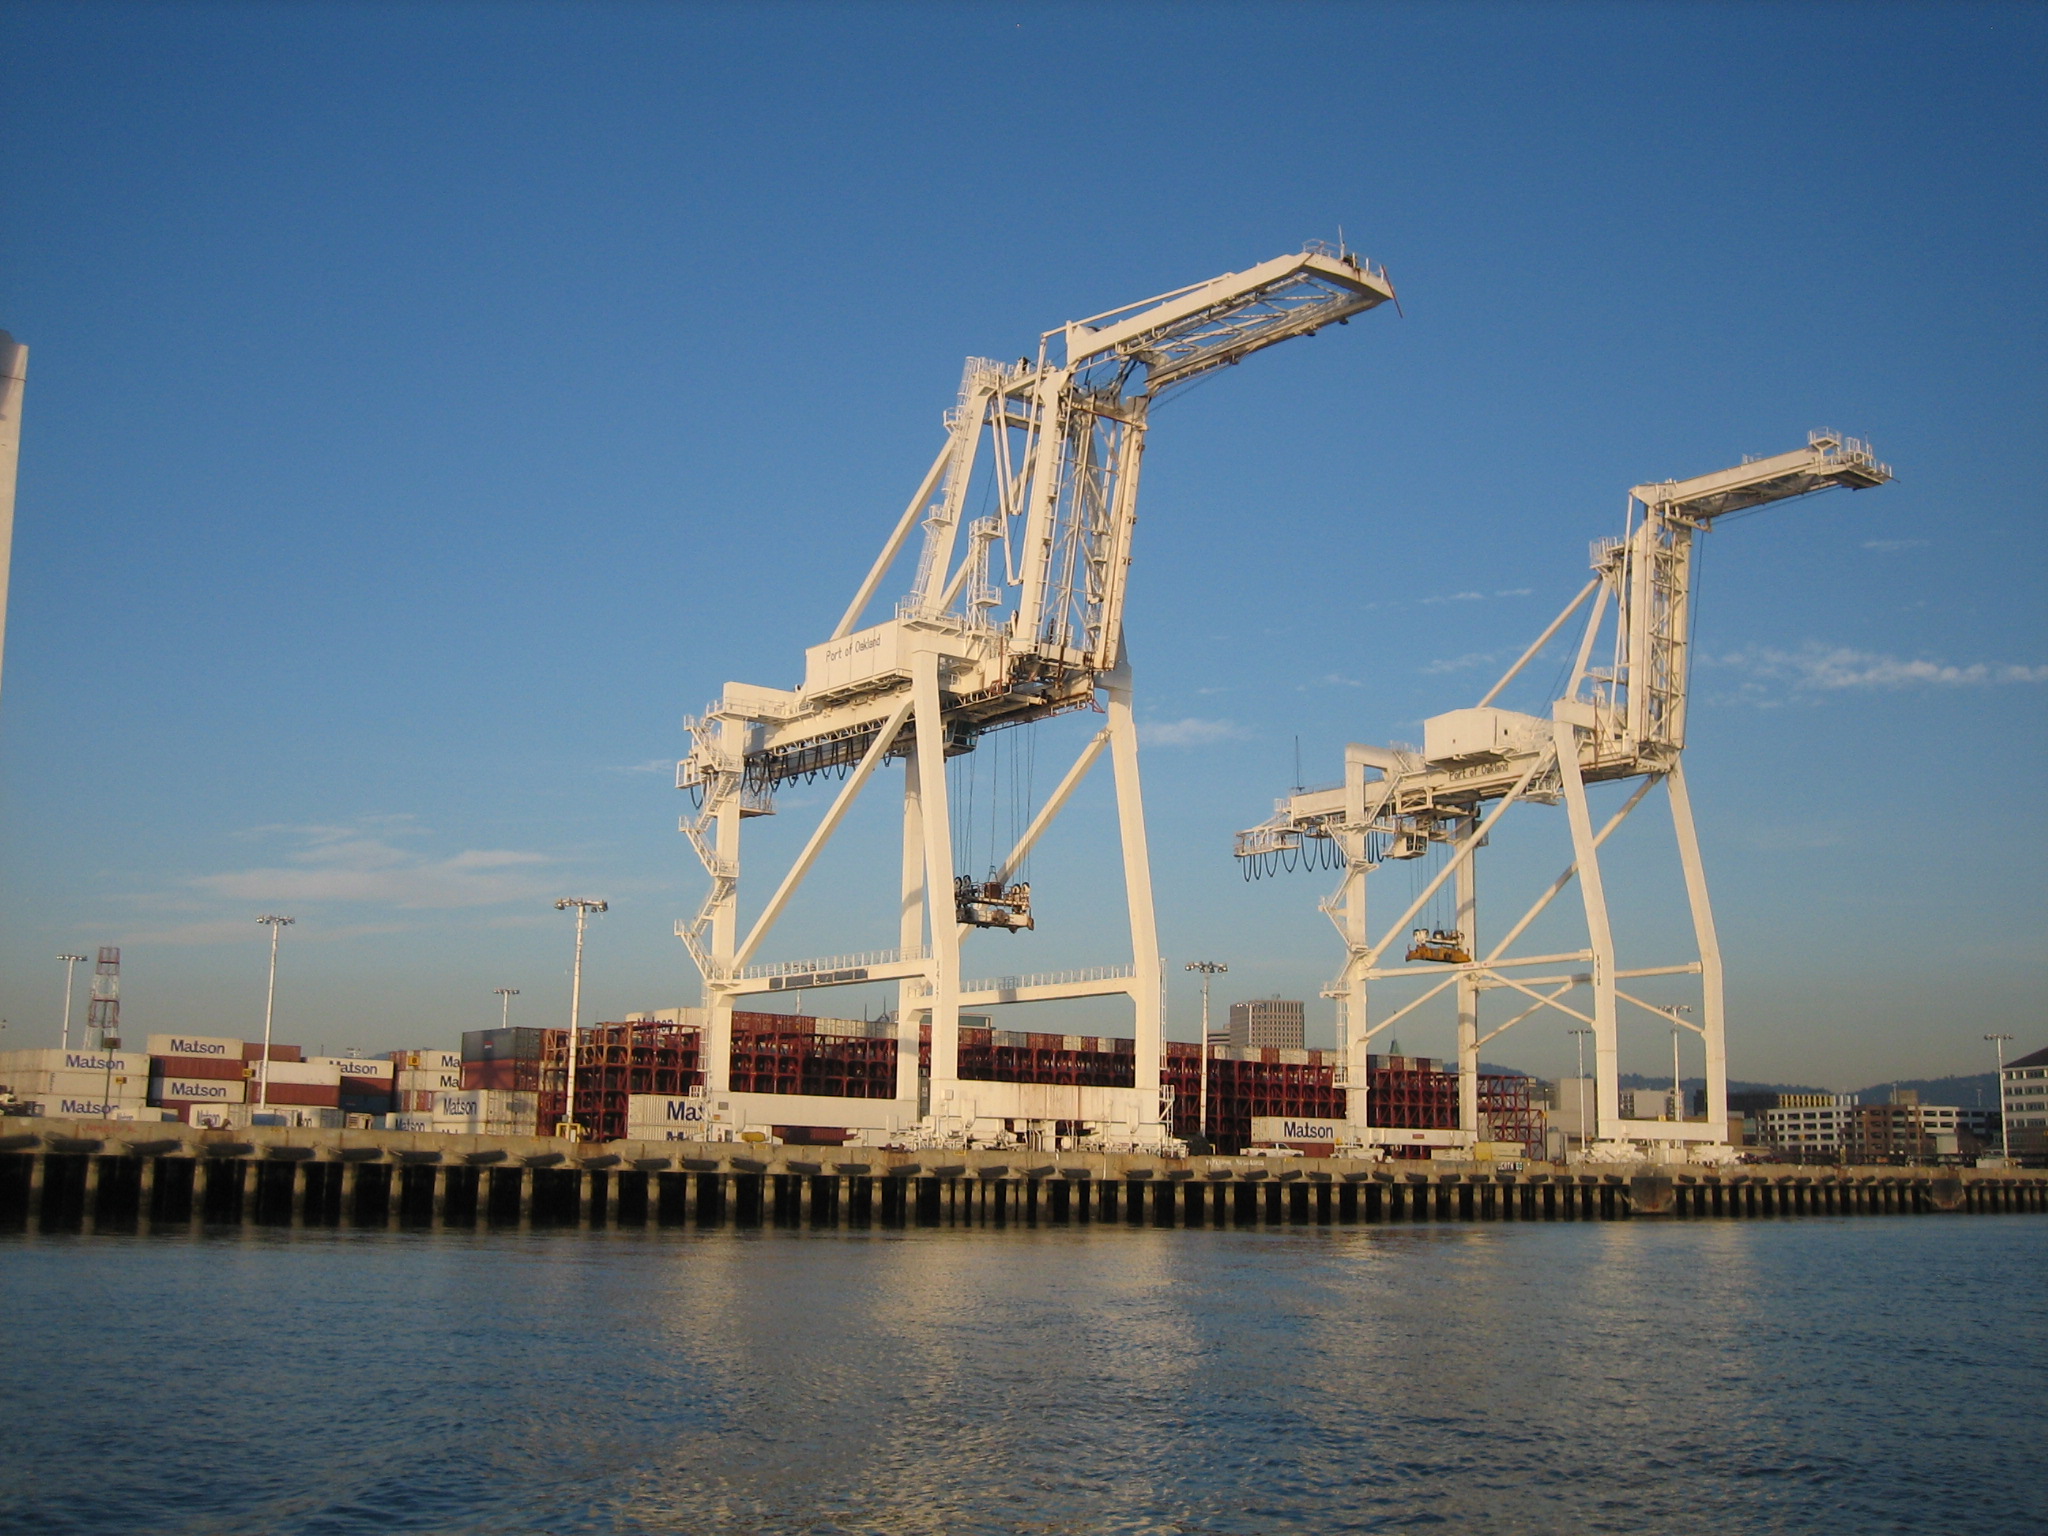 Shipping cranes